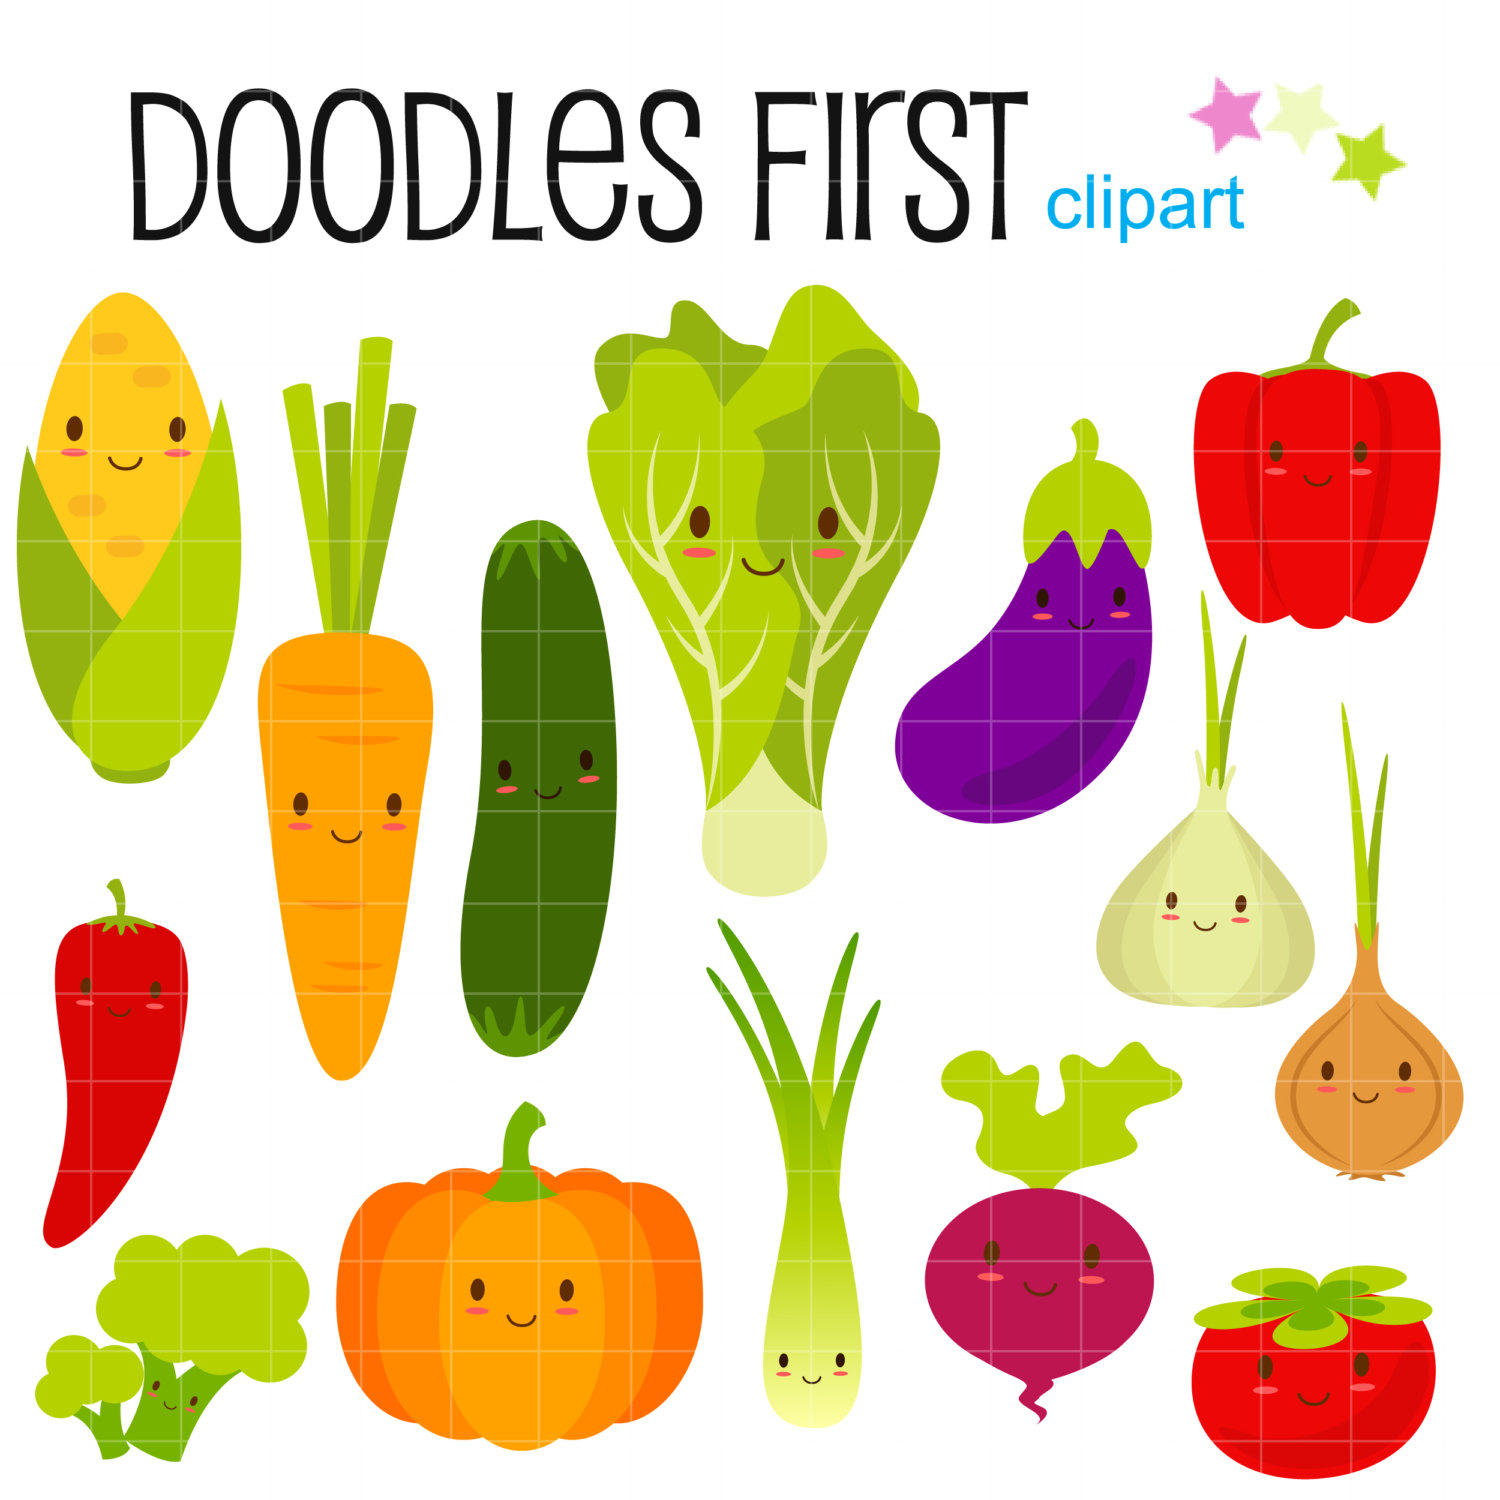 Vegetables Stock Illustration